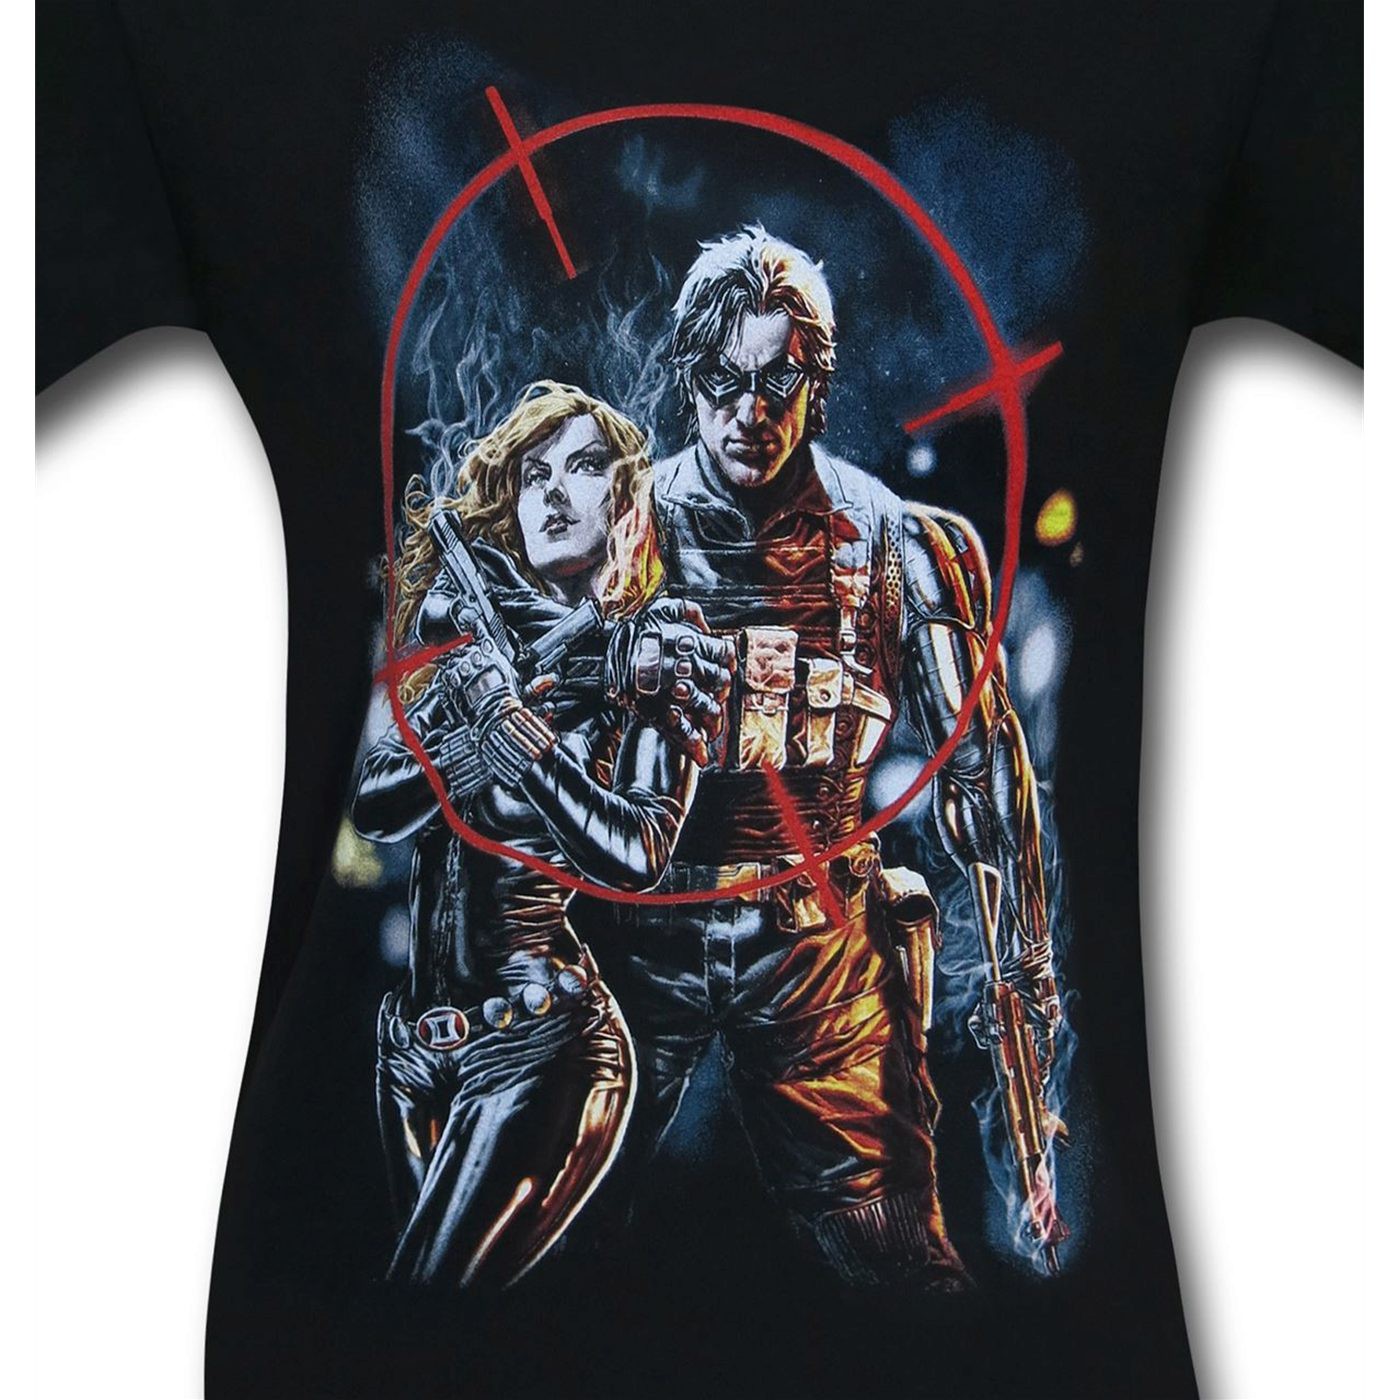 Winter Soldier and Black Widow Target Men's T-Shirt 